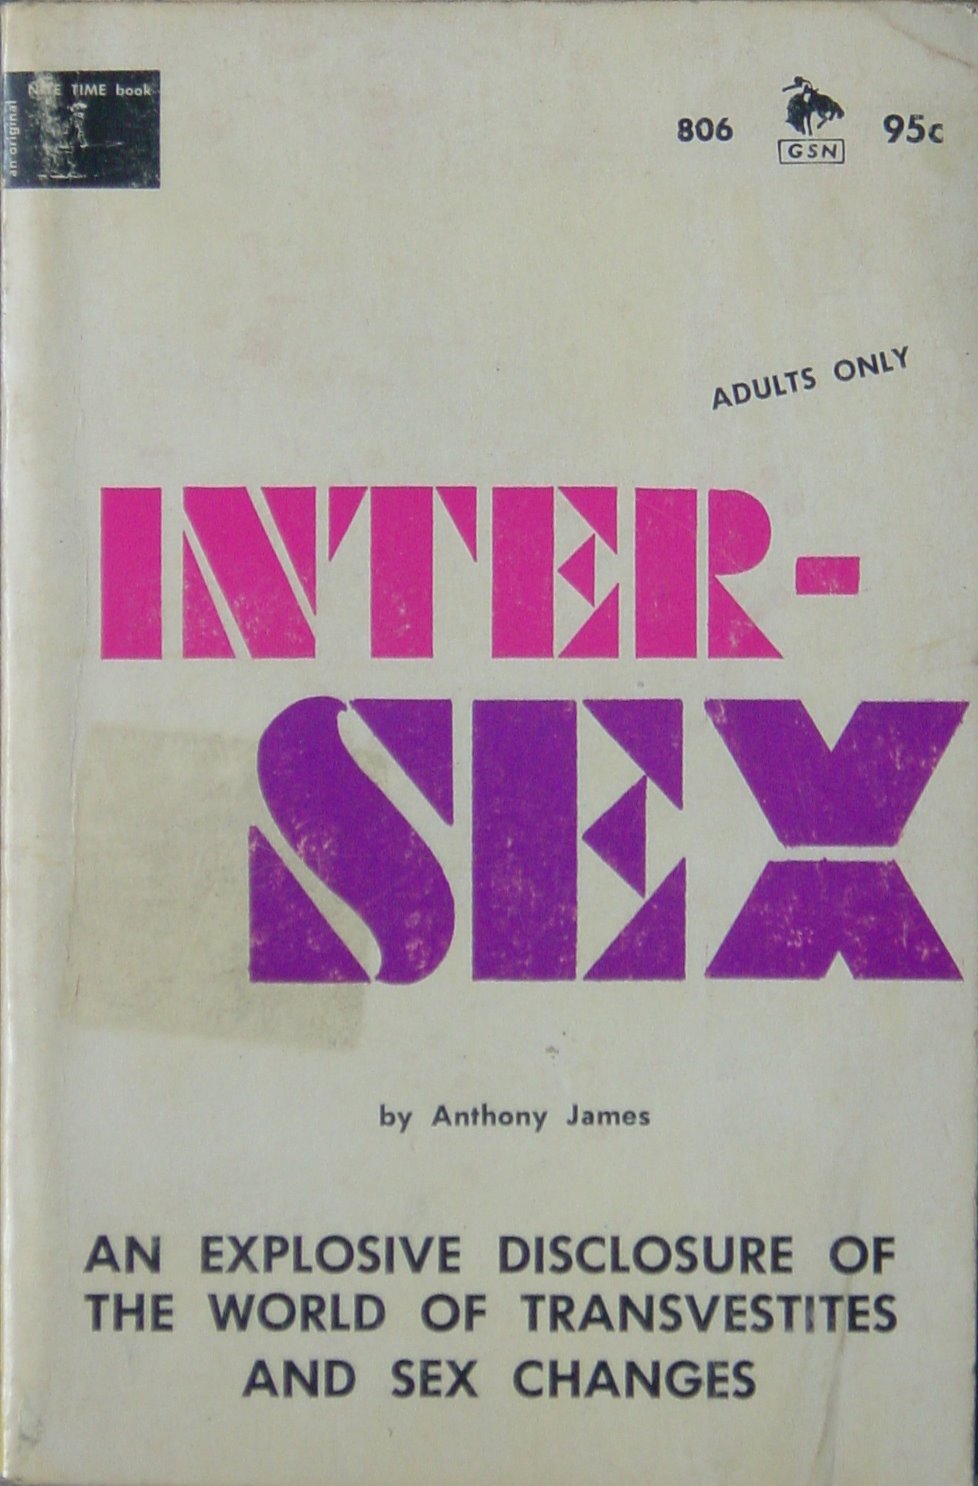 [james_anthony_-_inter-sex_01.jpg]